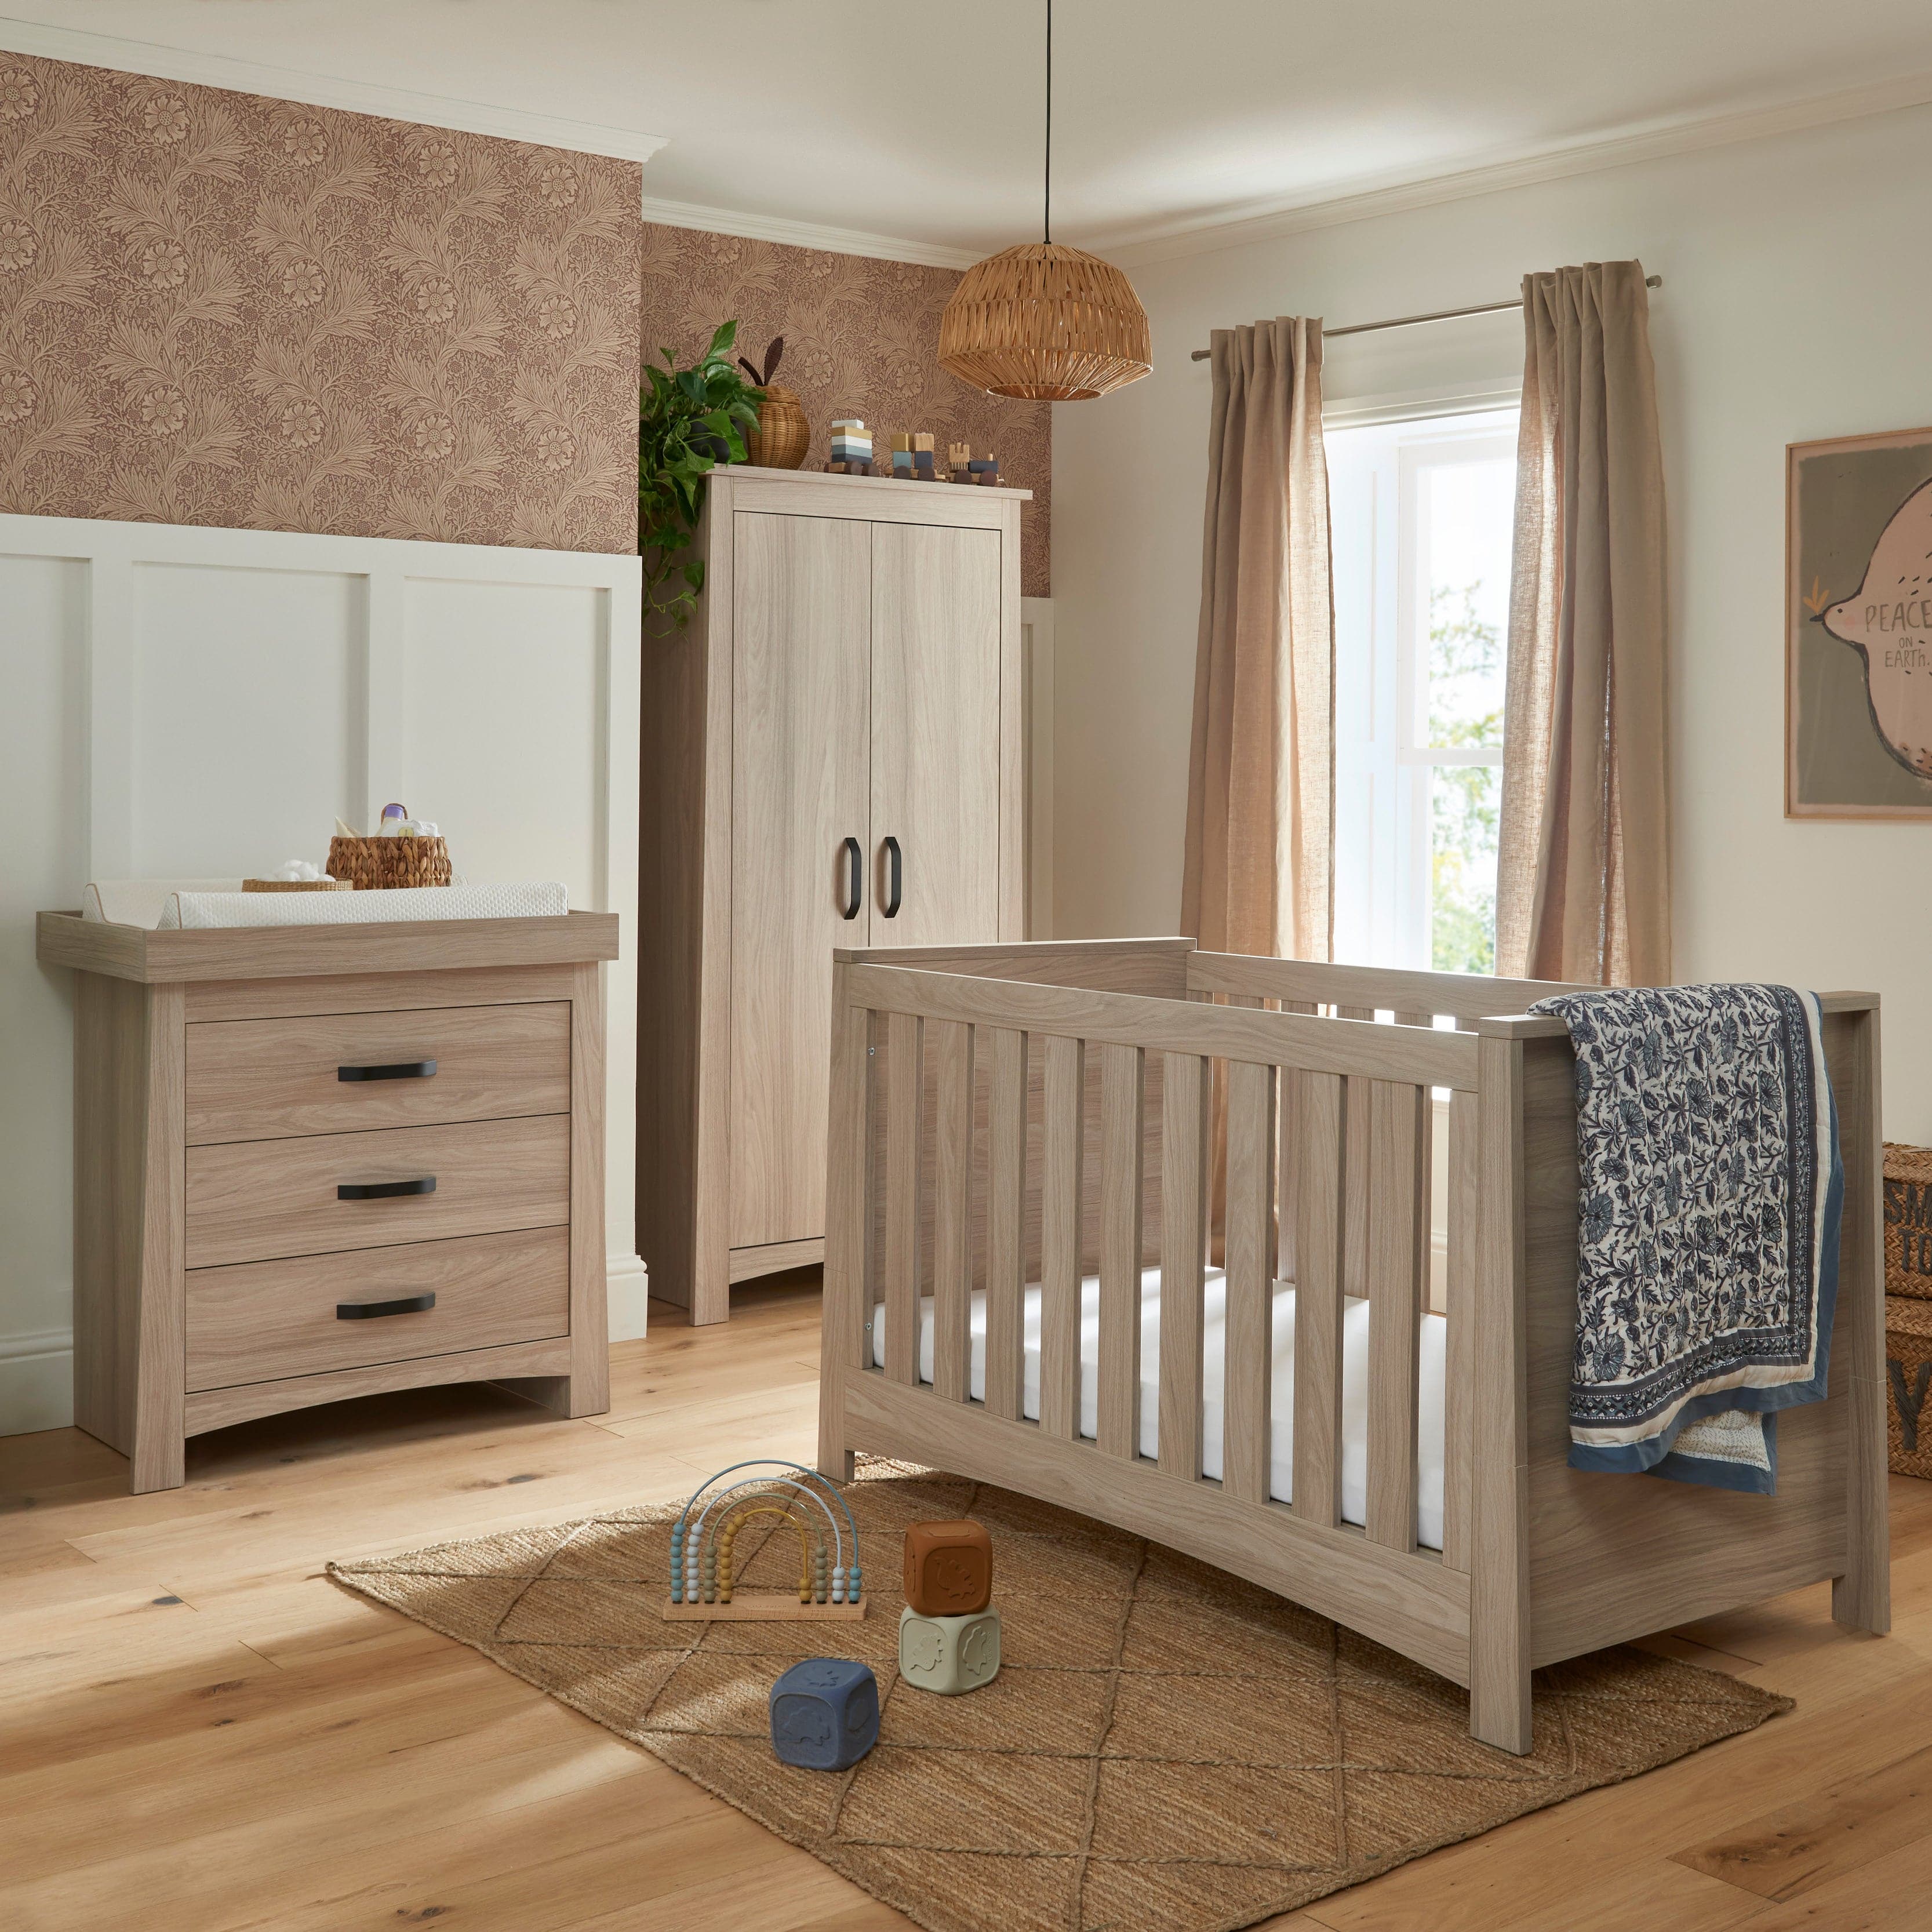 Cuddleco Isla 3 Piece Nursery Furniture Set - Ash - For Your Little One